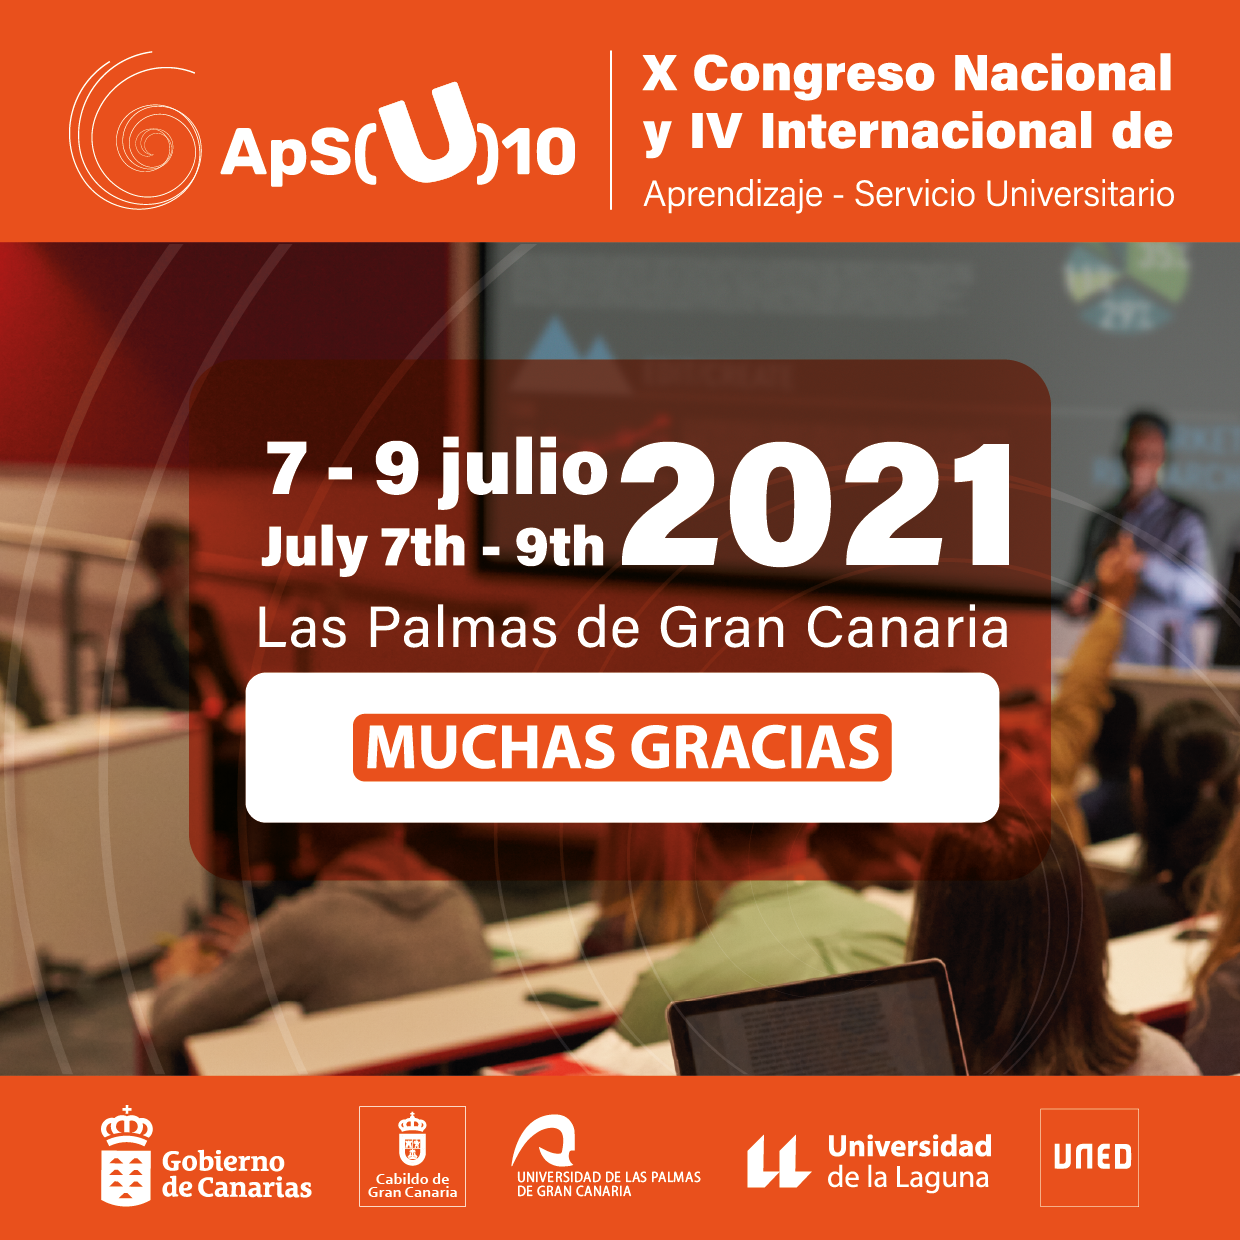  Congreso Internacional ApS(U)10/ canariasnoticias